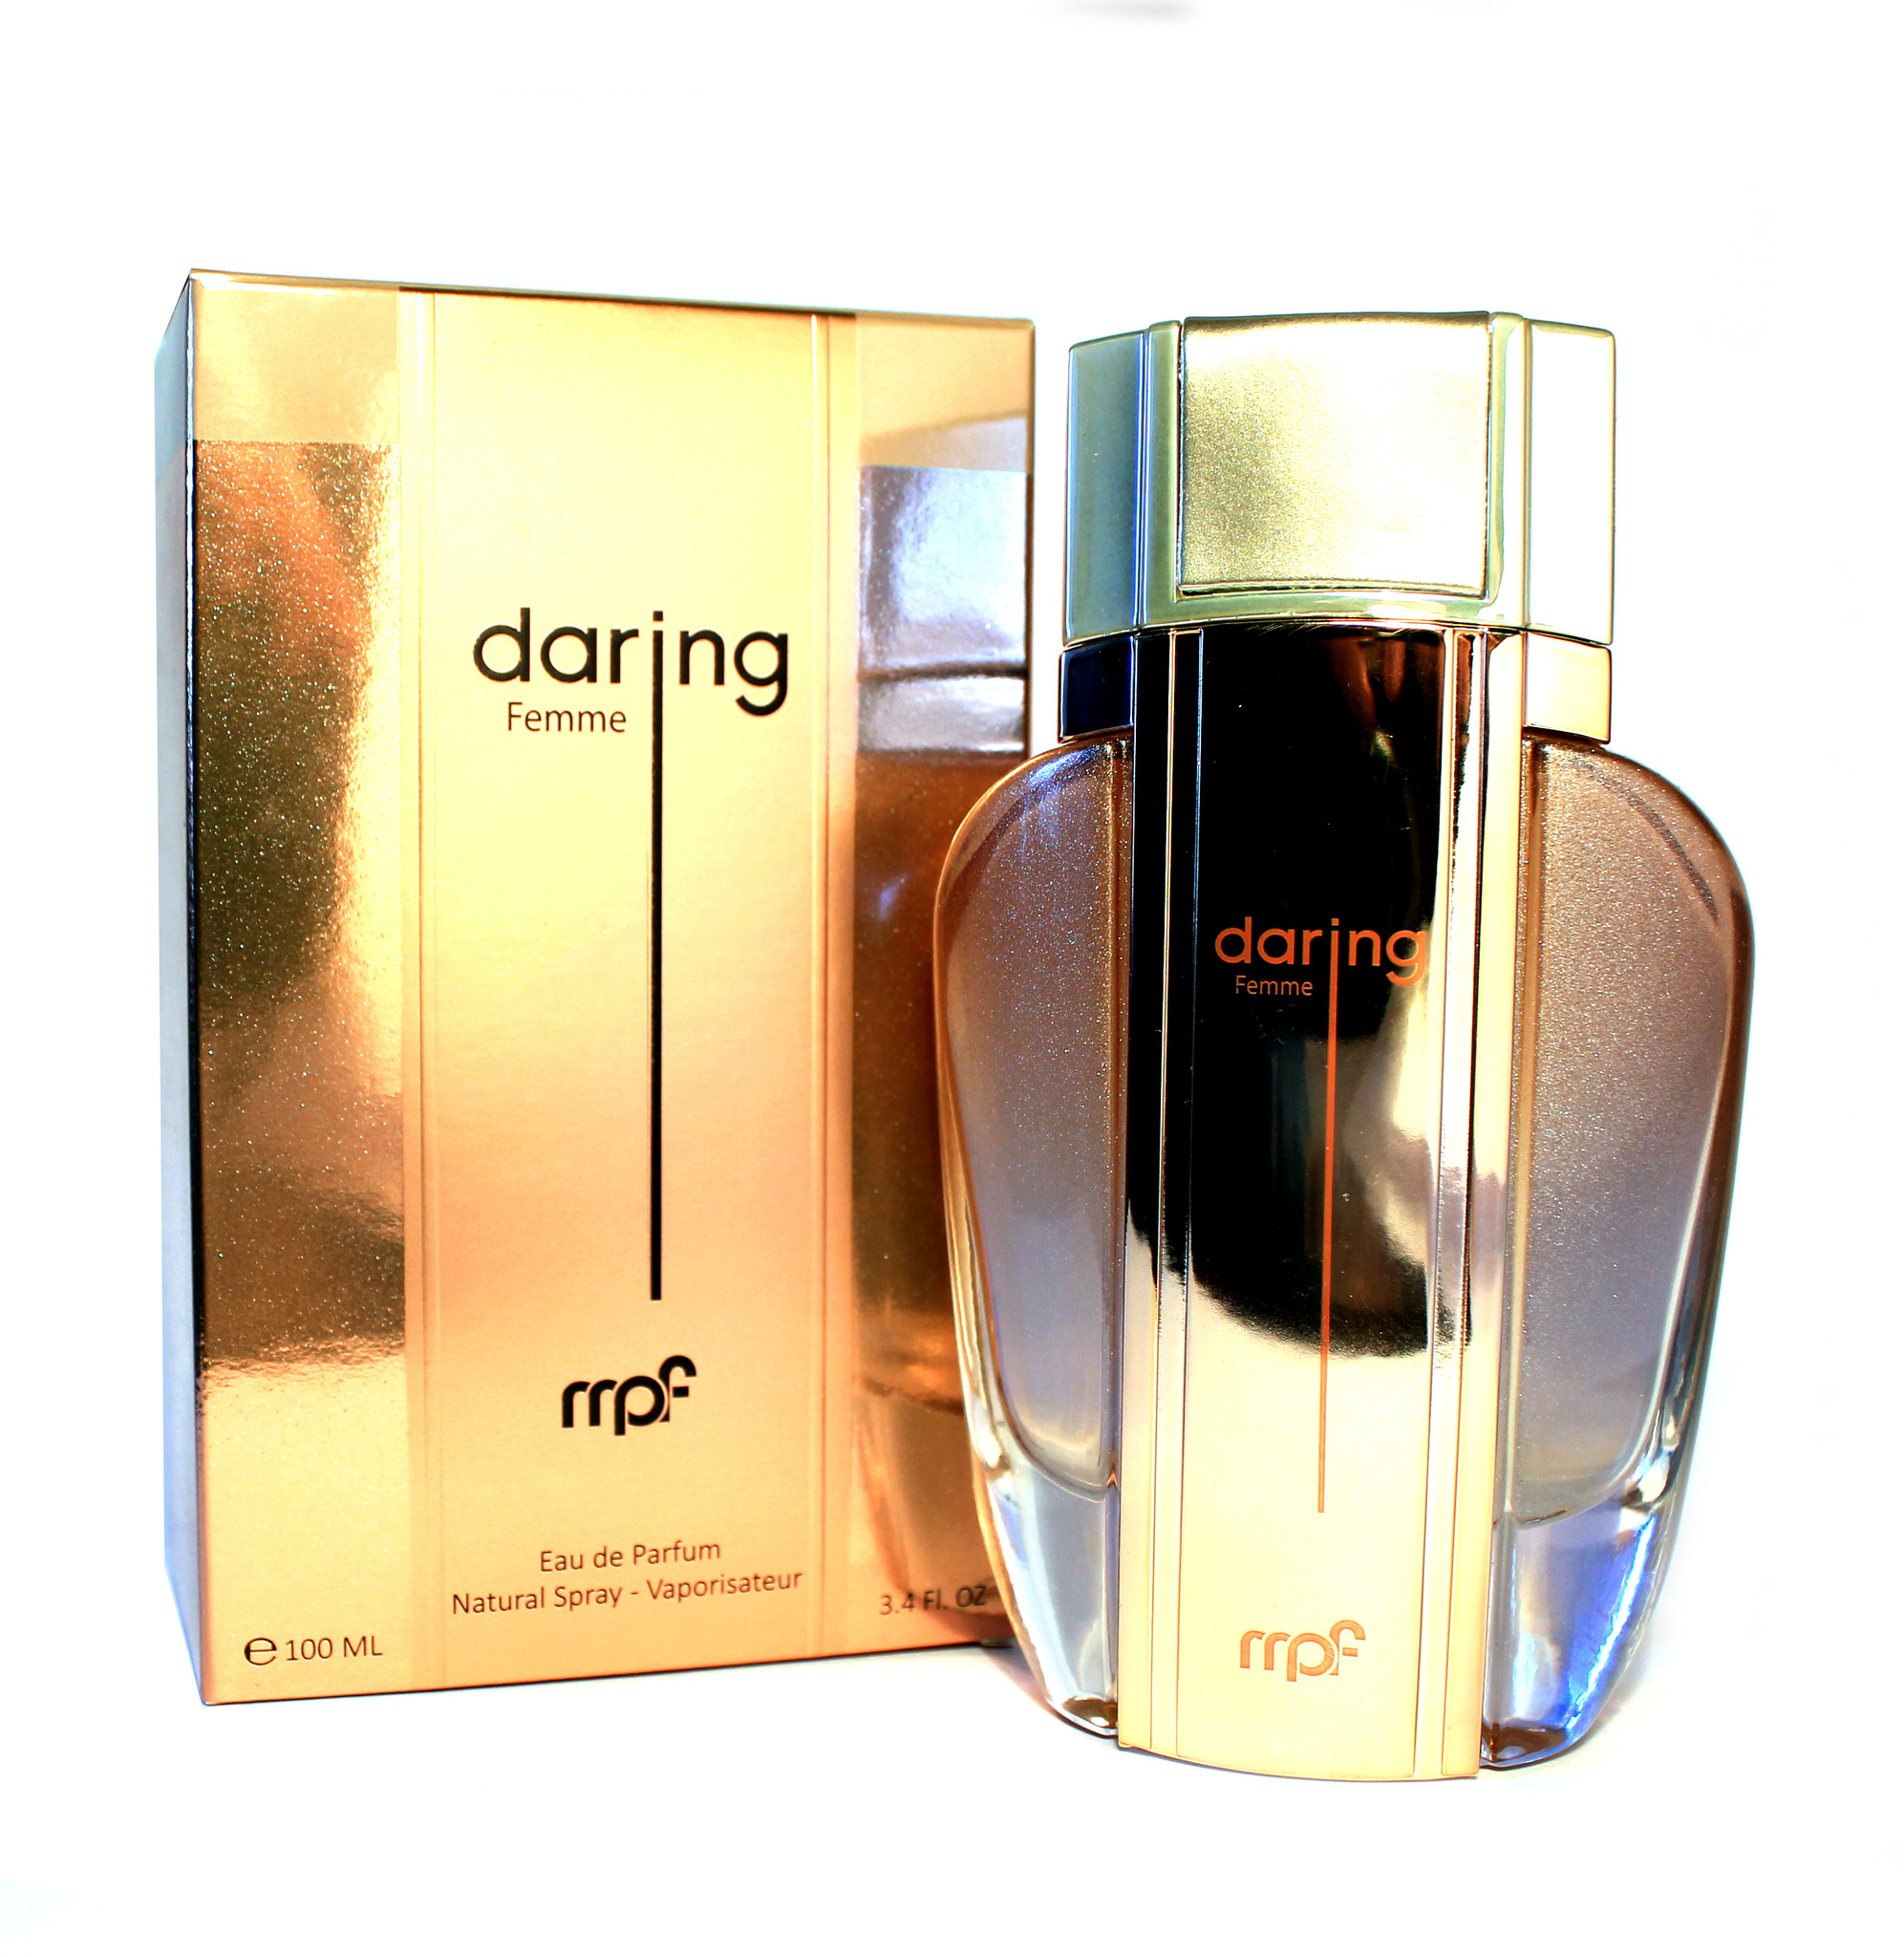 Пробник для Darling Femme Дарлинг Для Женщин 1 мл спрей от Май Парфюмс My Perfumes